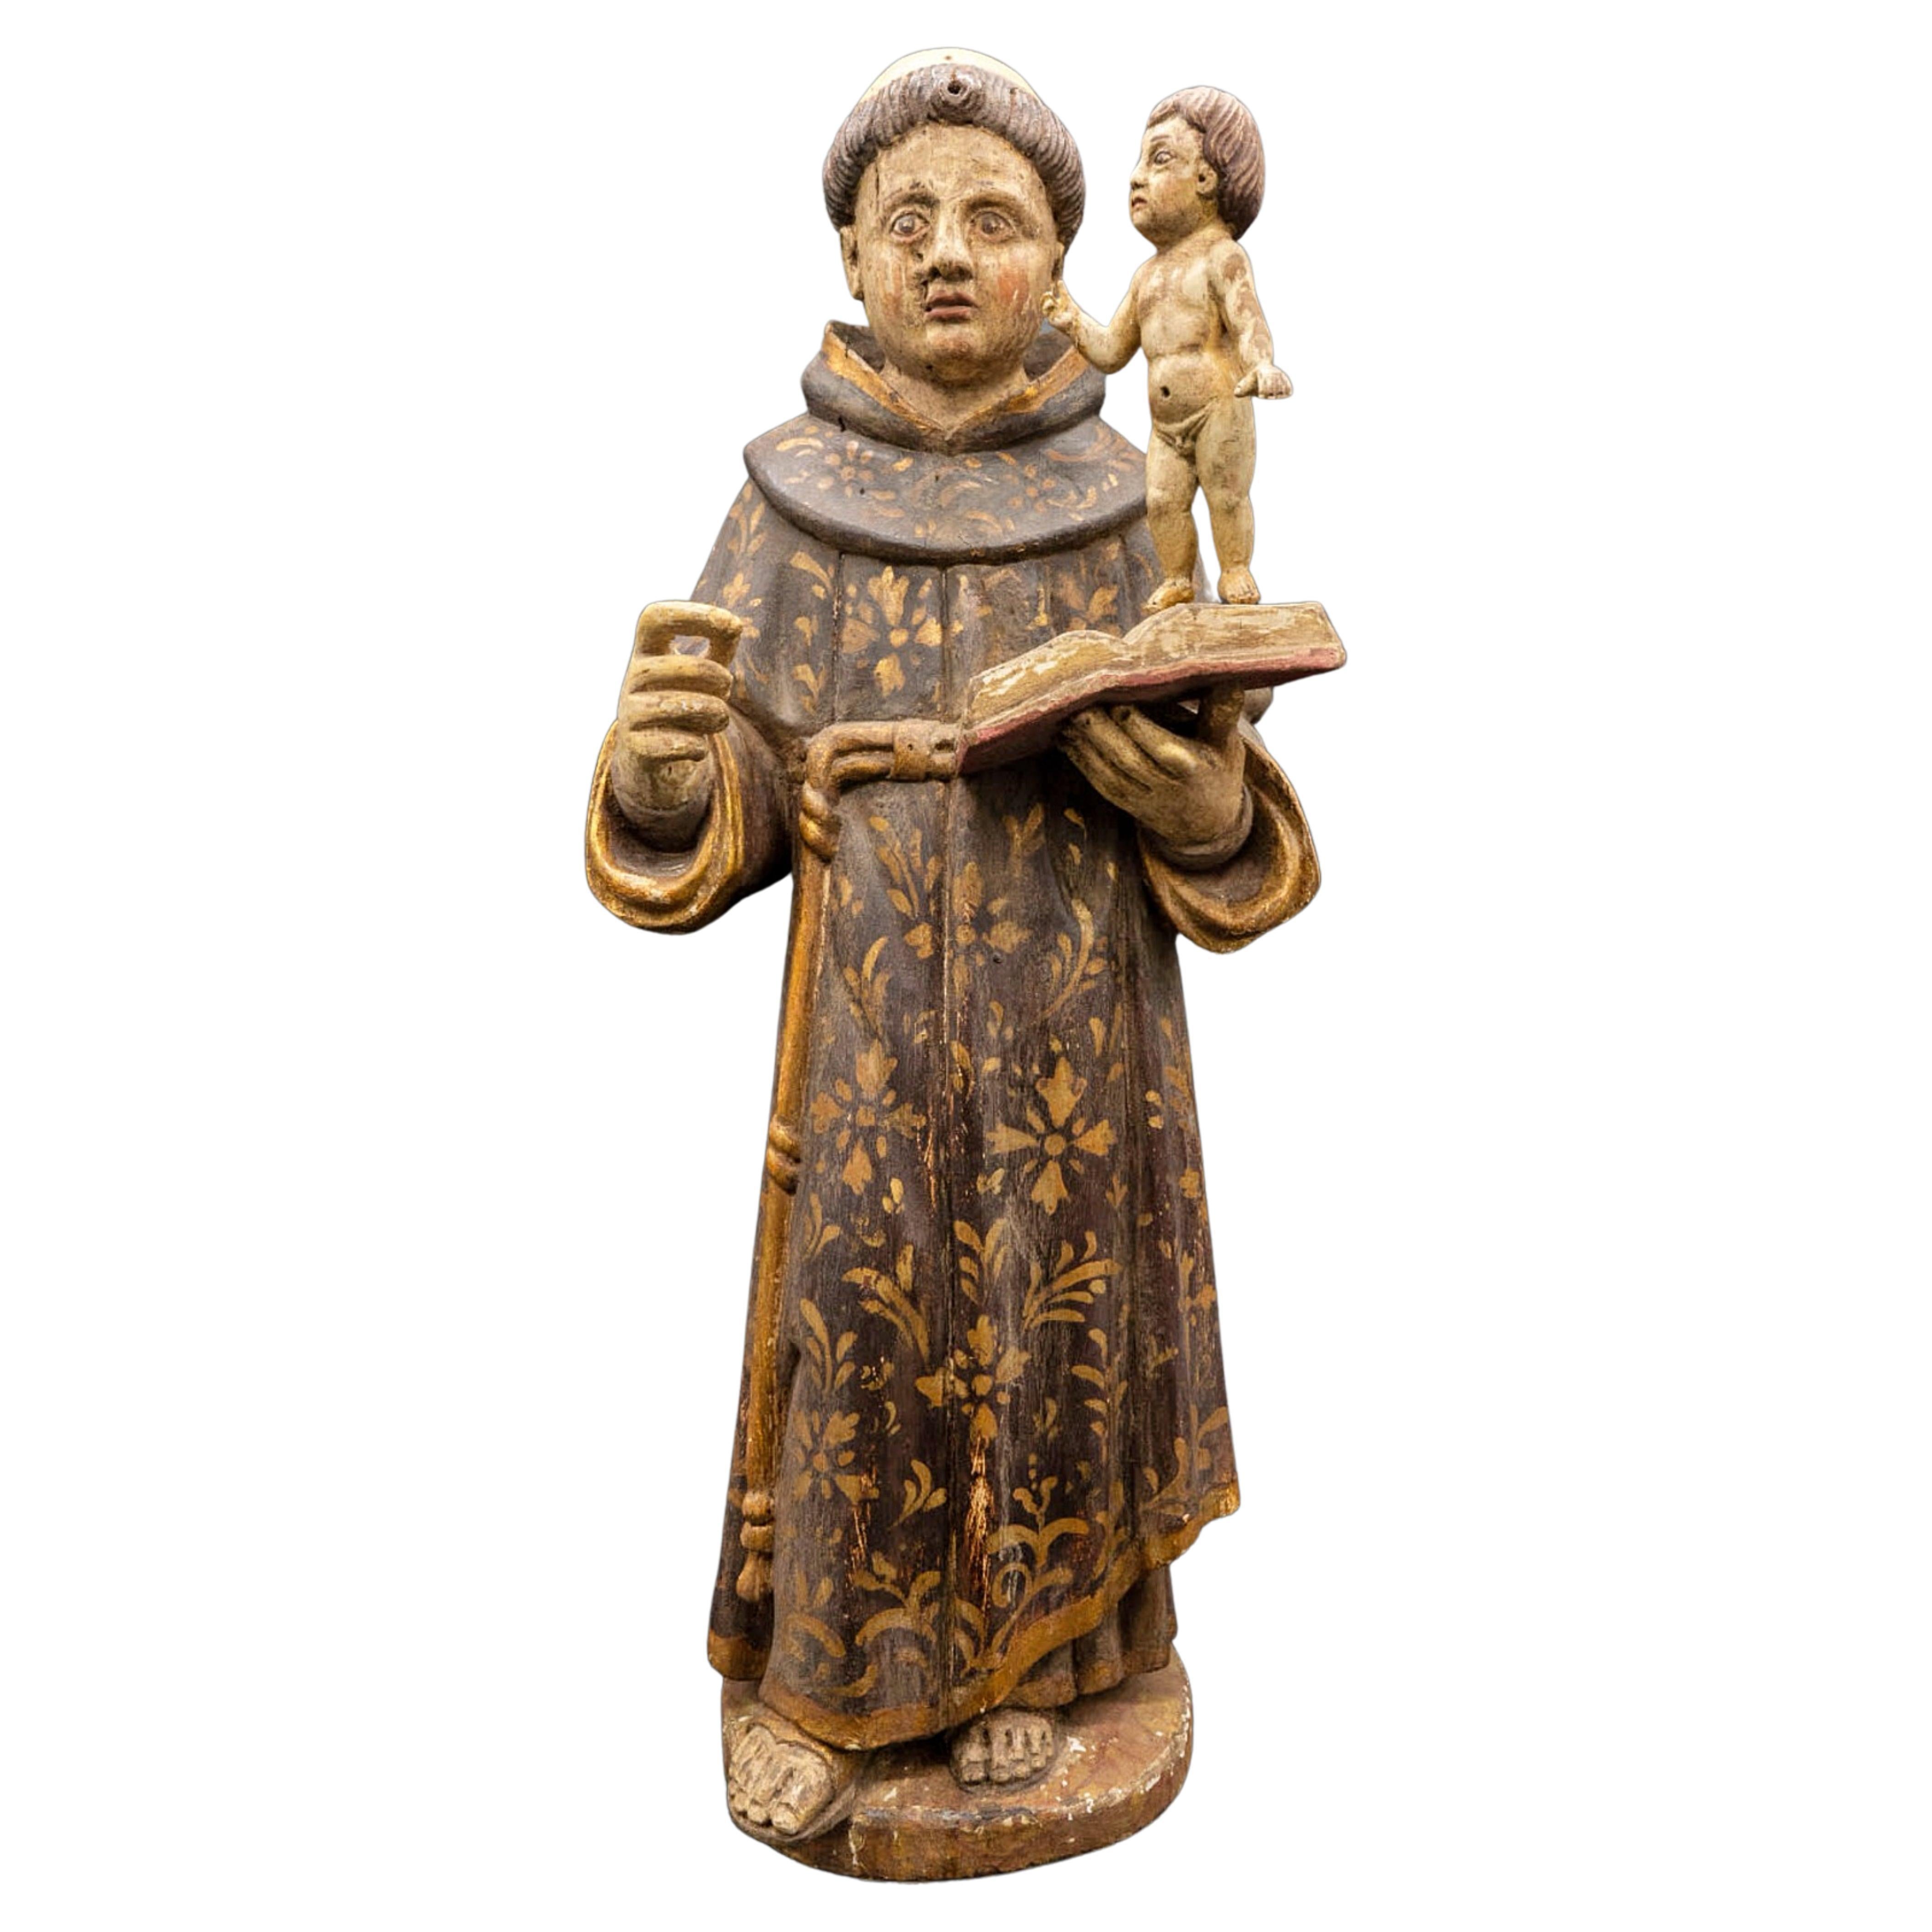 Spanish Sculpture of the 17th Century "Saint Antony and the Child Jesus"